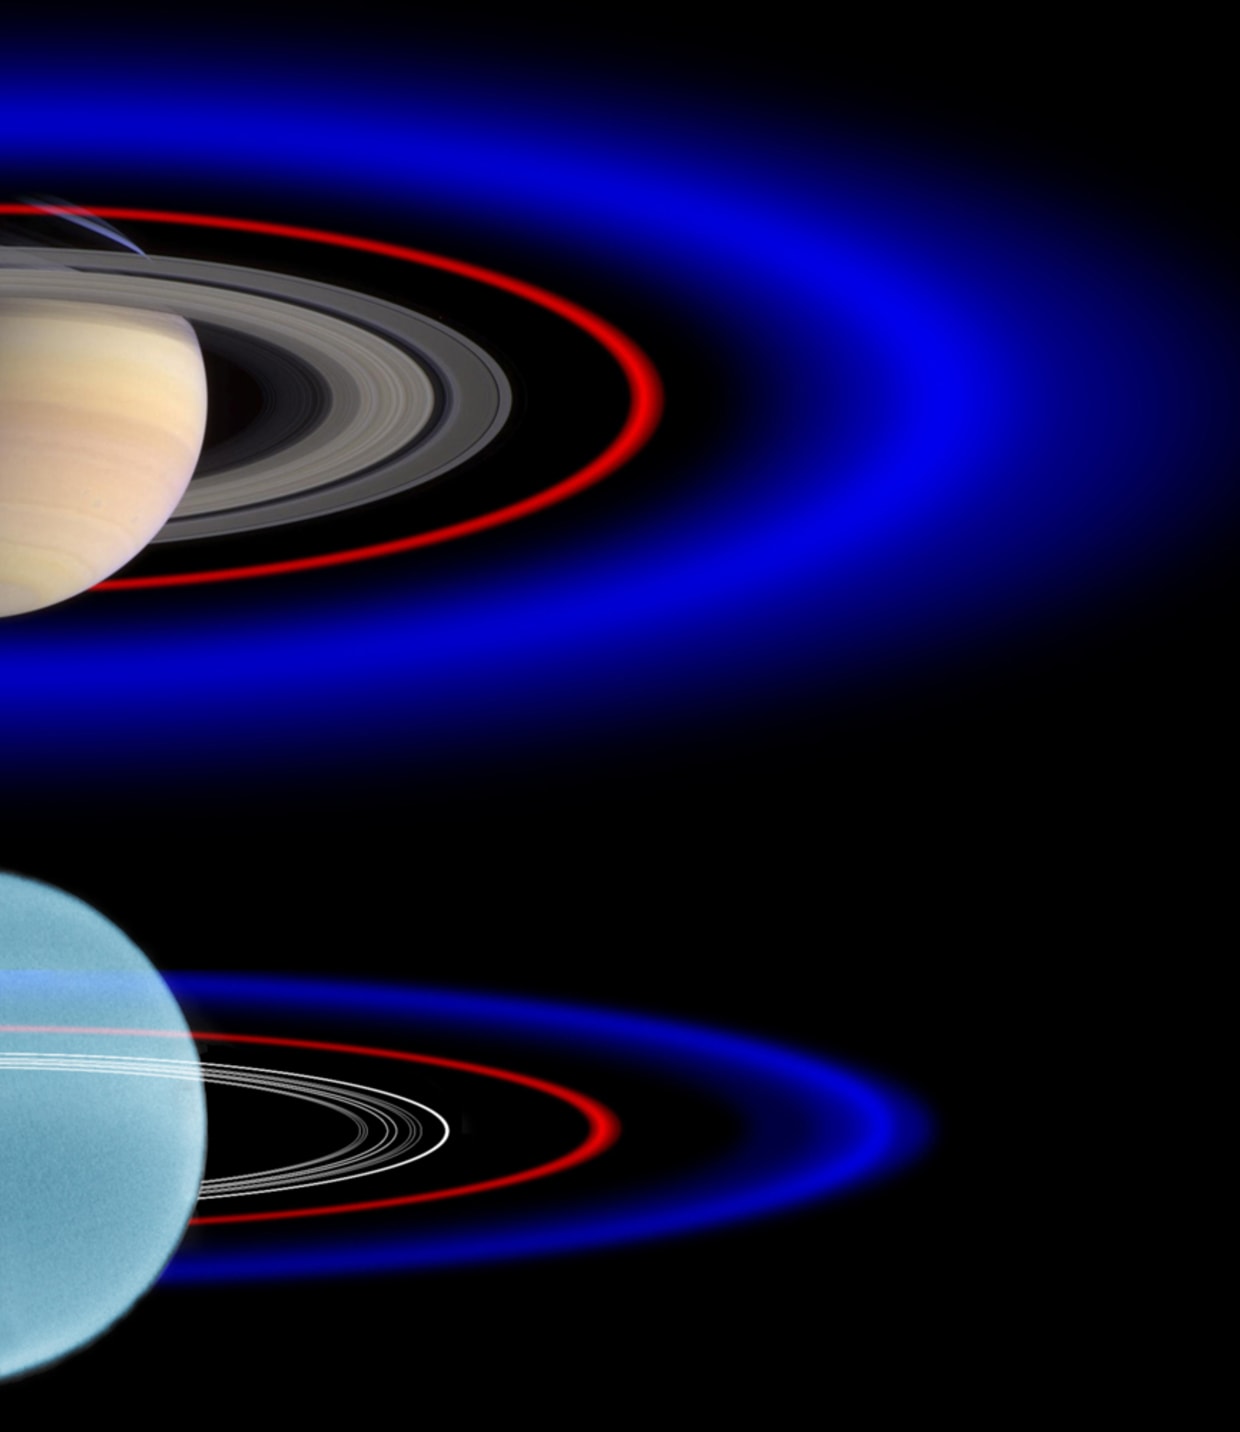 File:Uranus rings and moons (cropped).jpg - Wikimedia Commons